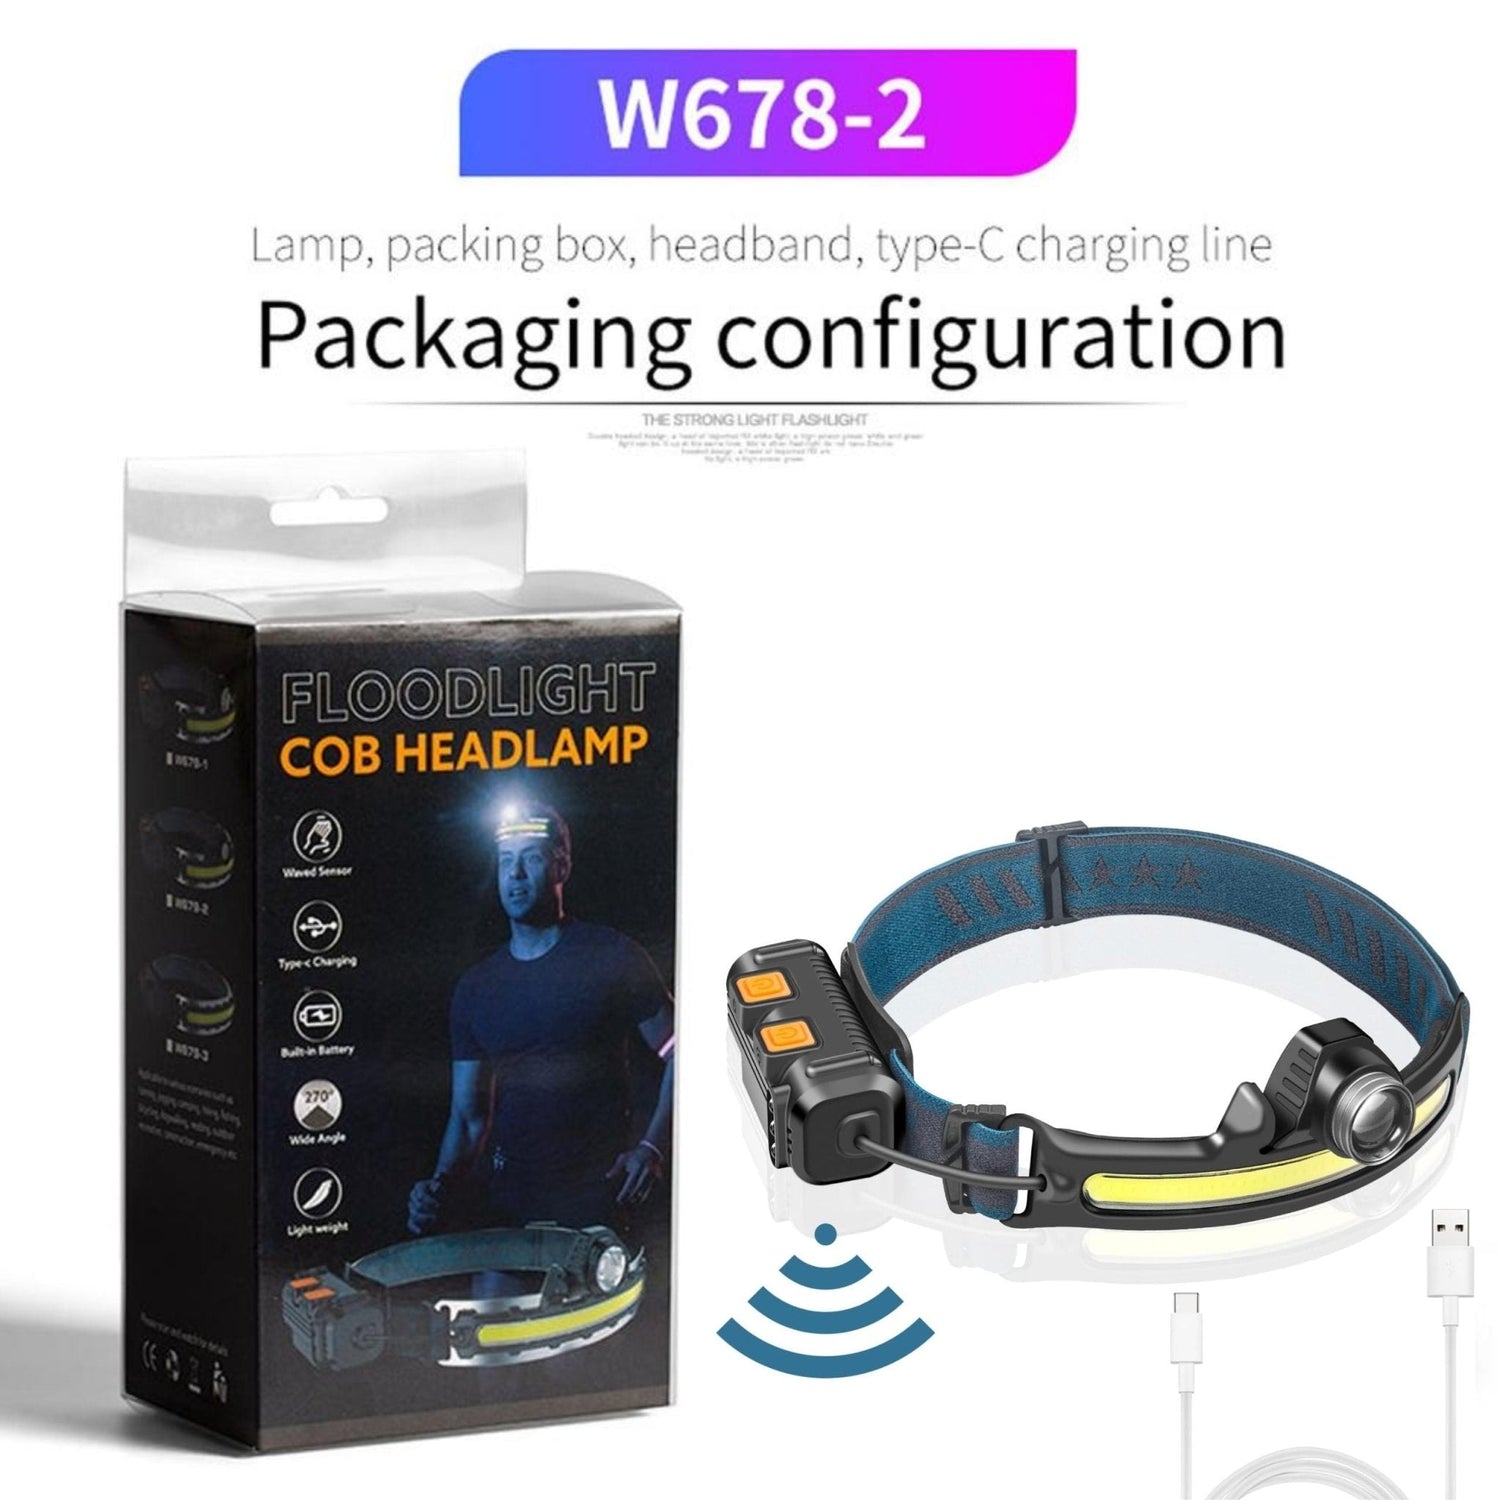 COB Floodlight Headlamp W678-2 - Black